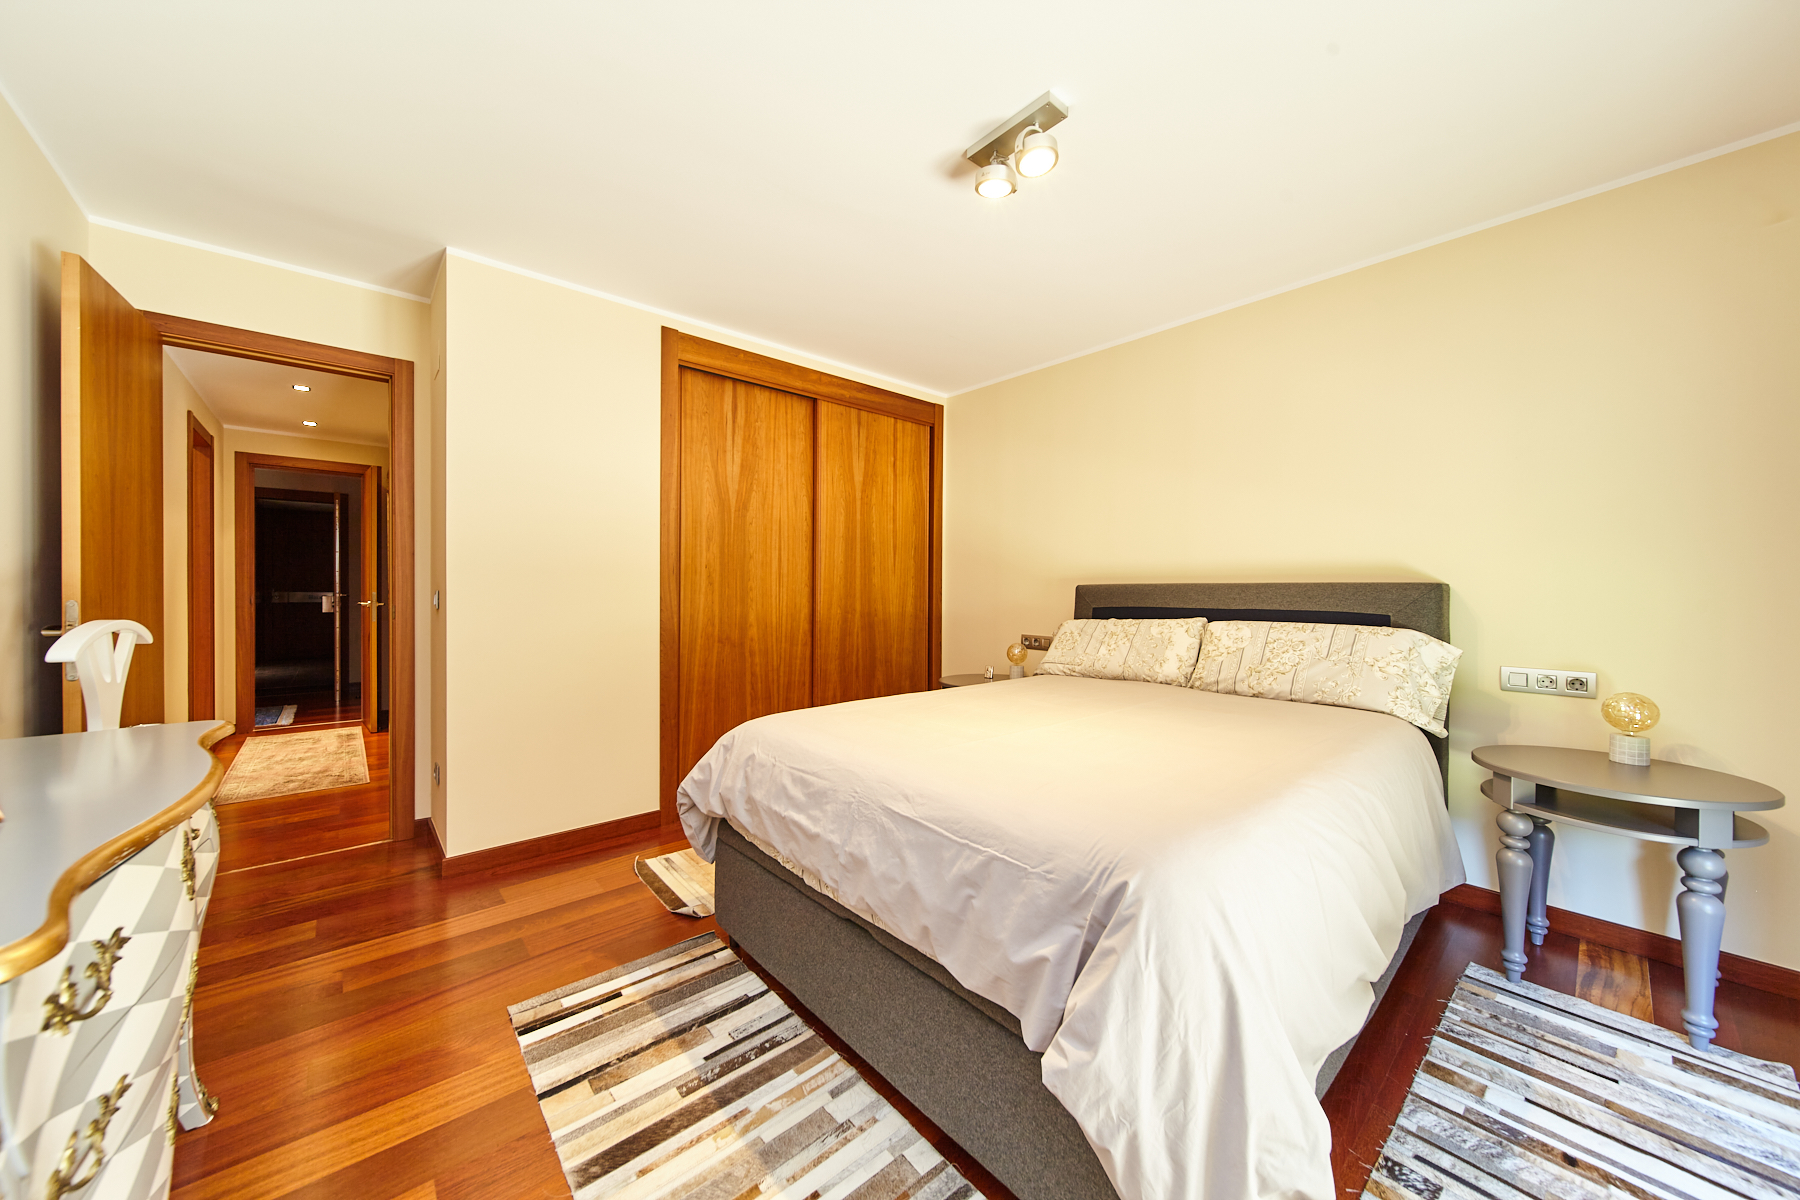 Pis en venda a Escaldes Engordany, 4 habitacions, 189 metres